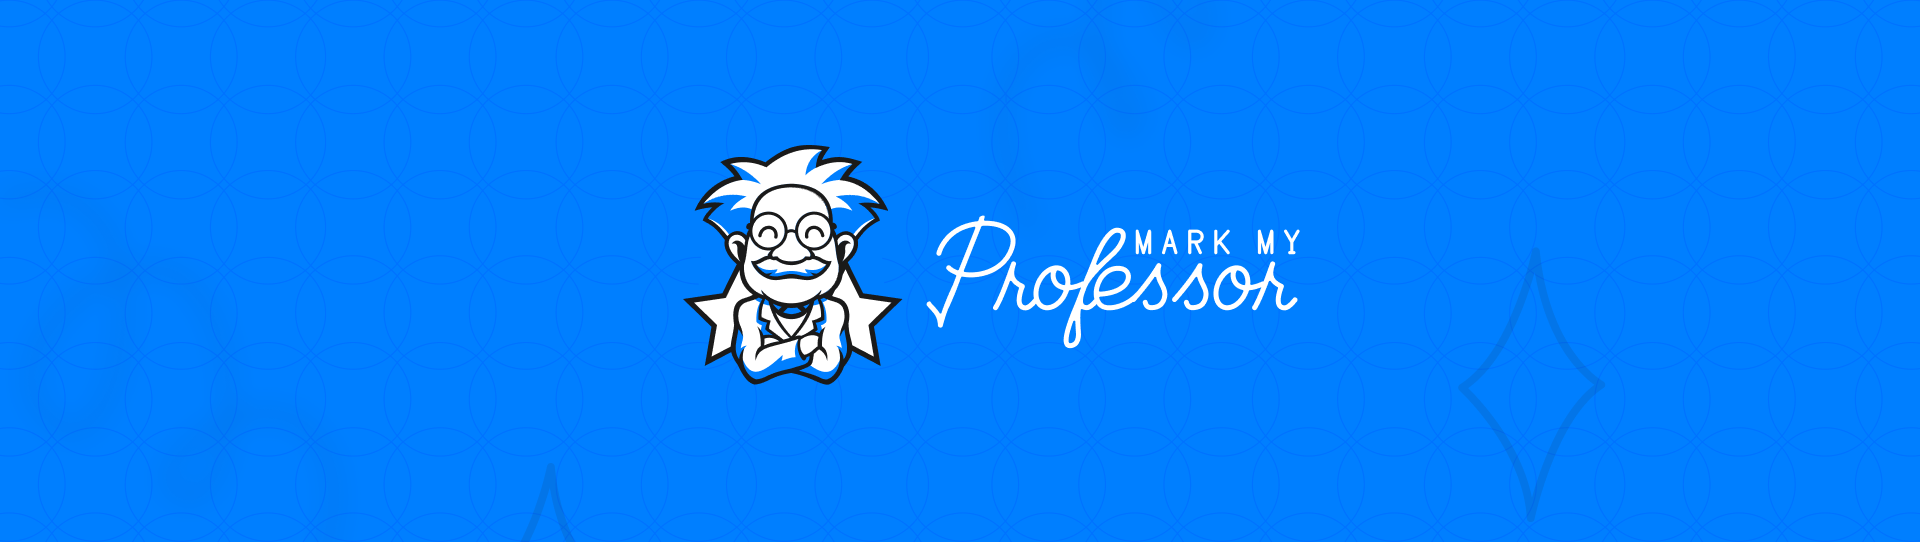 MarkMyProfessor logo design and new website development